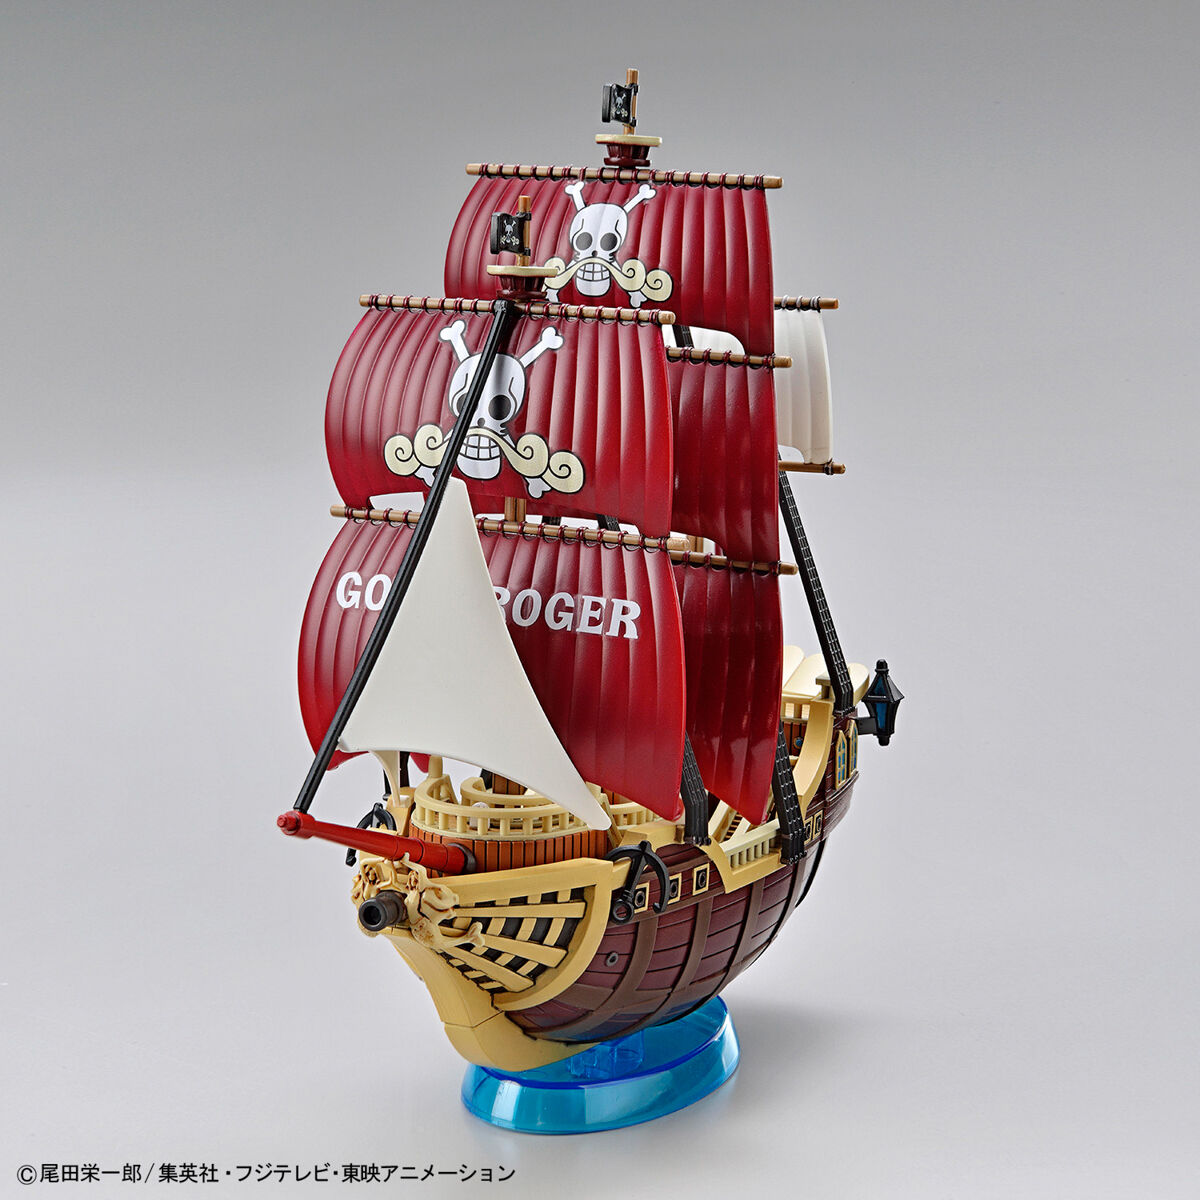 One Piece Grand Ship Collection Oro Jackson-Bandai-Ace Cards & Collectibles